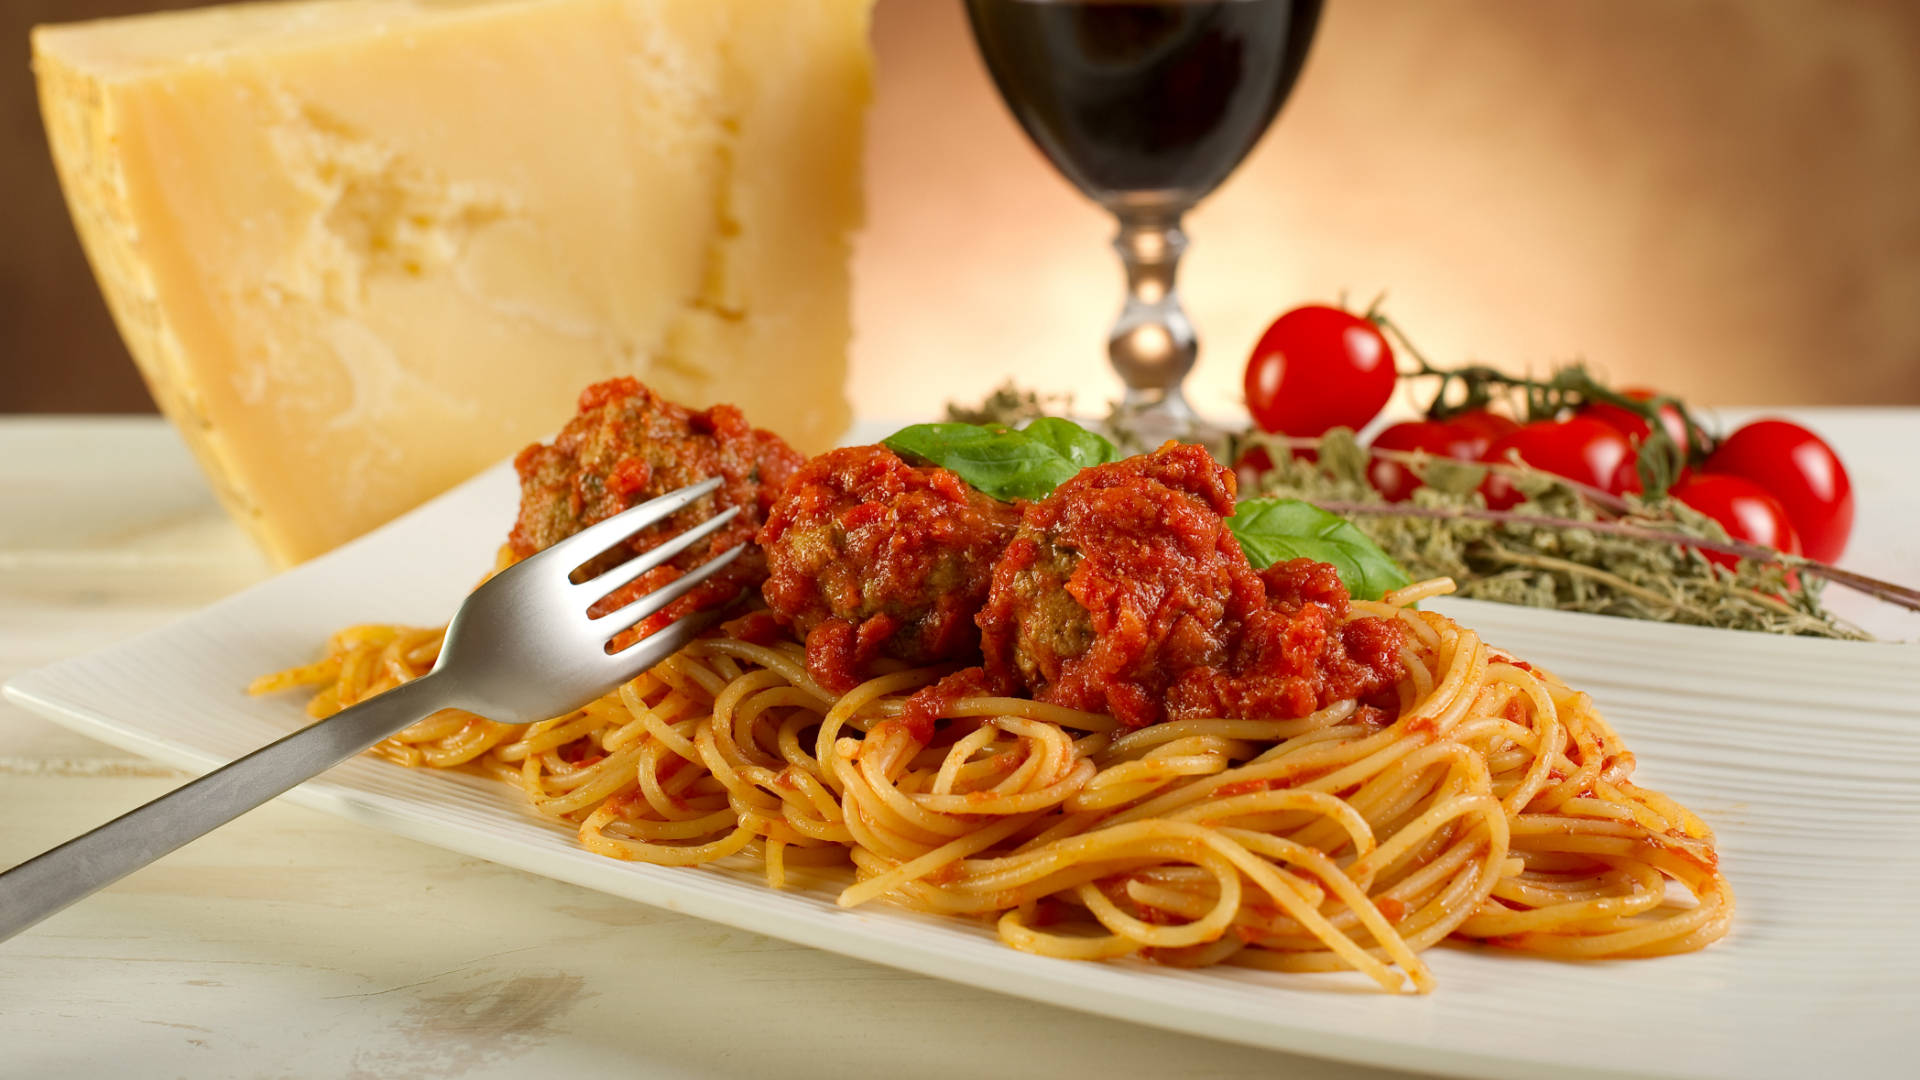 Hearty Italian Dinner: Pasta With Meatballs